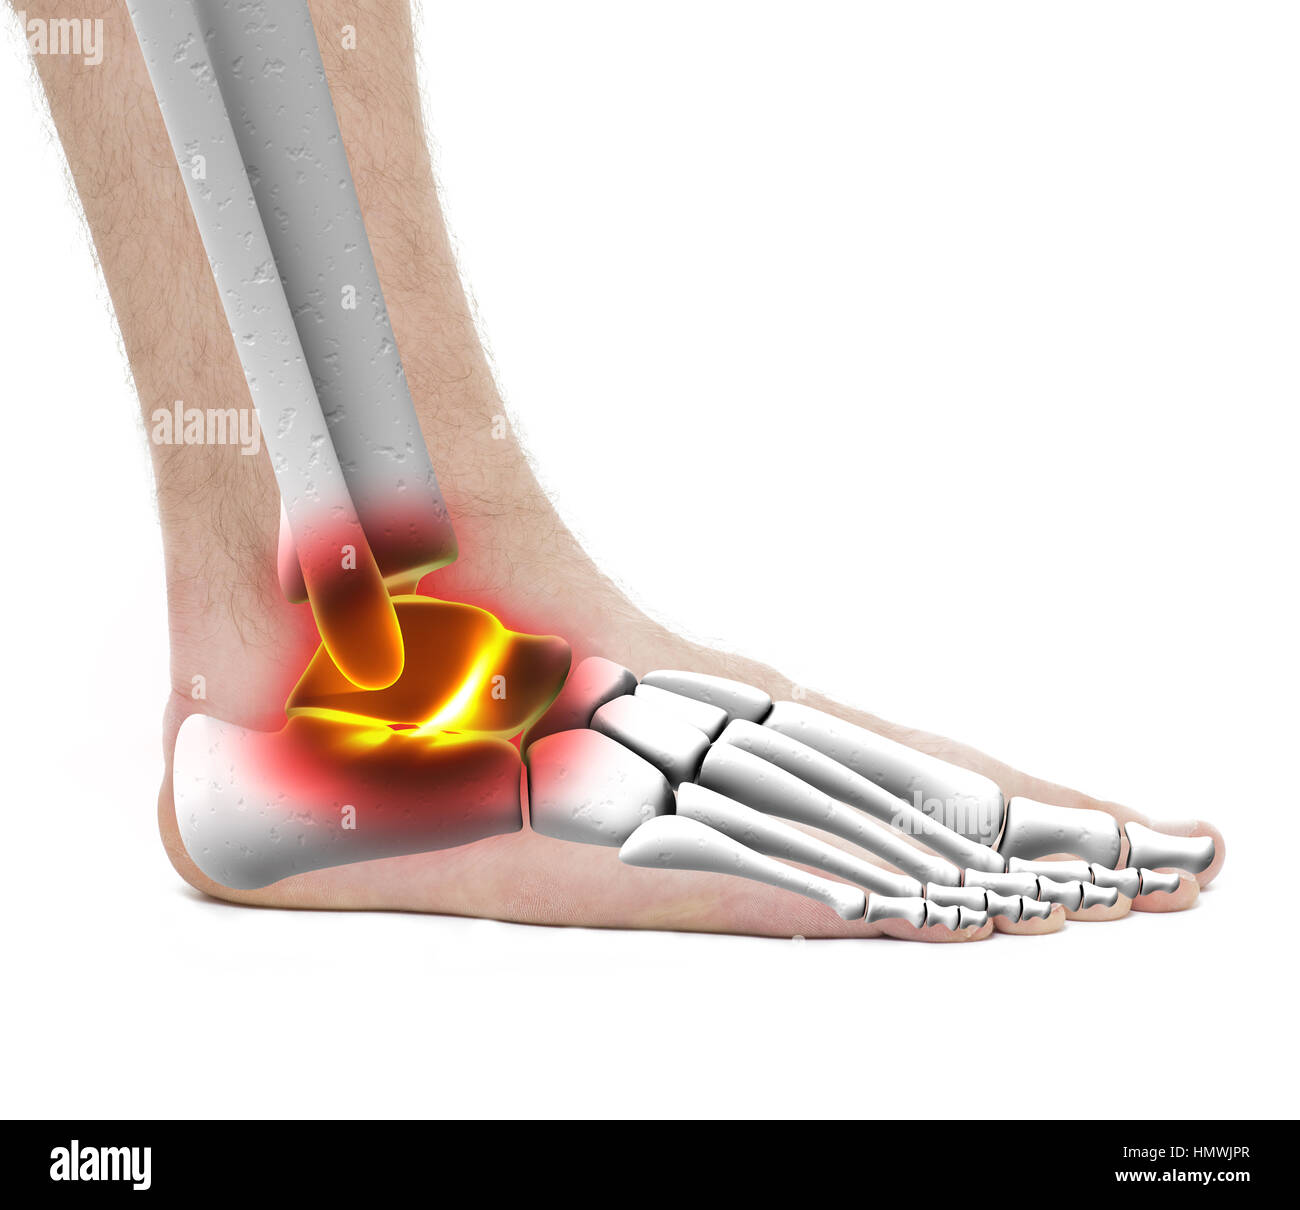 Ankle Pain Injury - Anatomy Male - Studio photo isolated on white Stock Photo